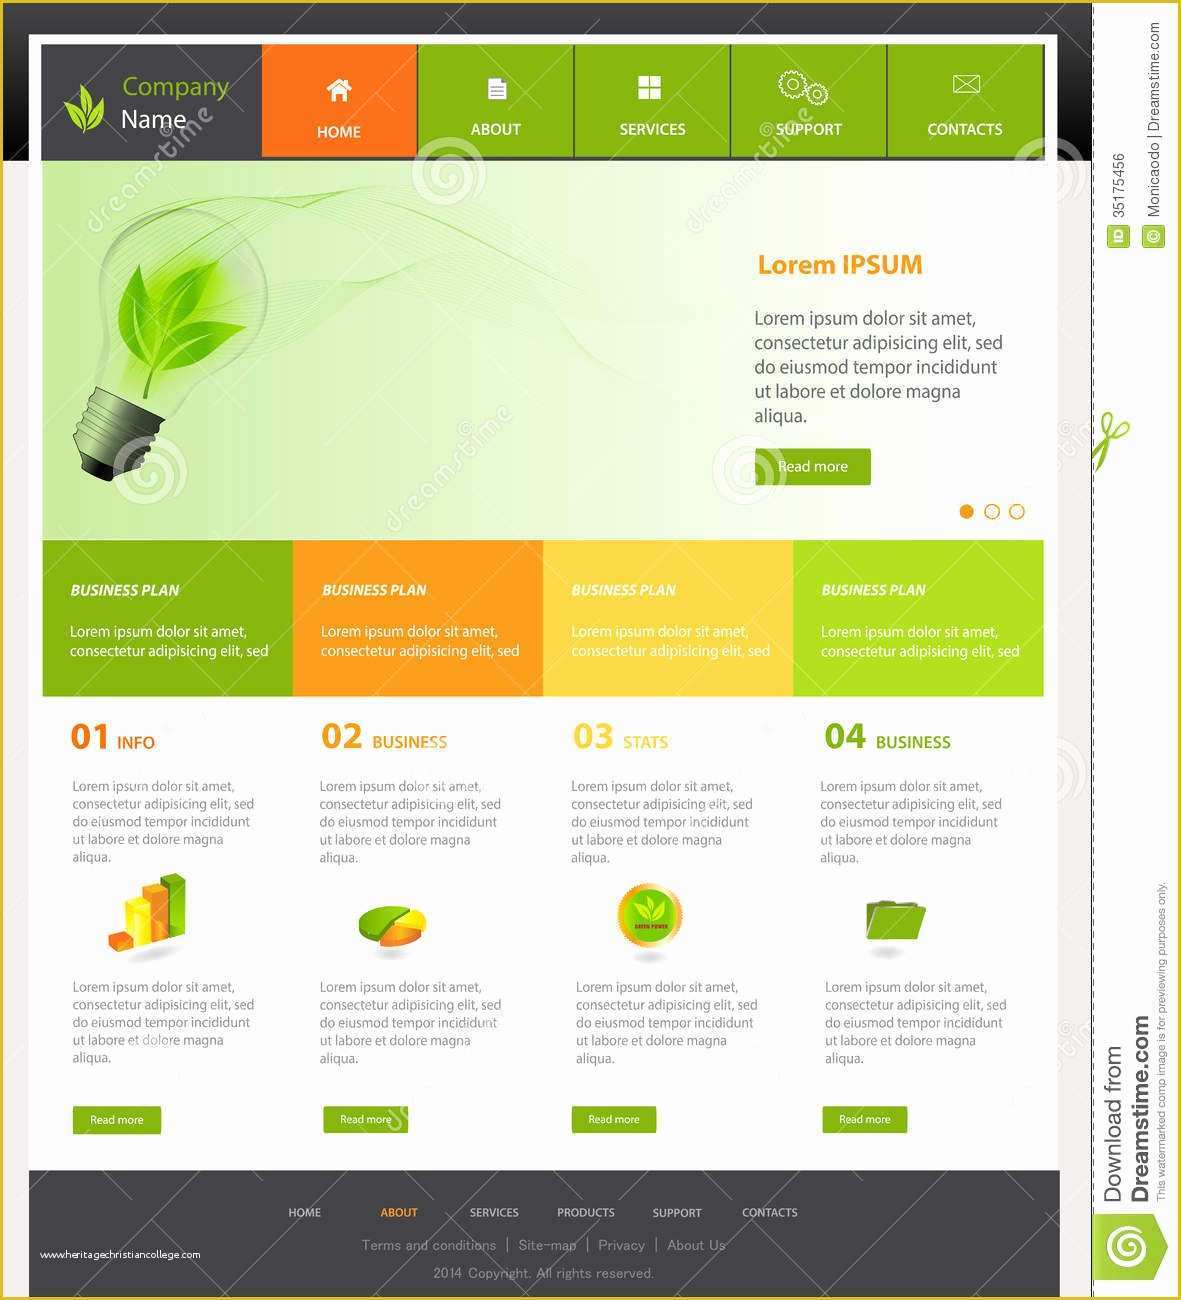 Free Website Design Templates Of Website Design Templates